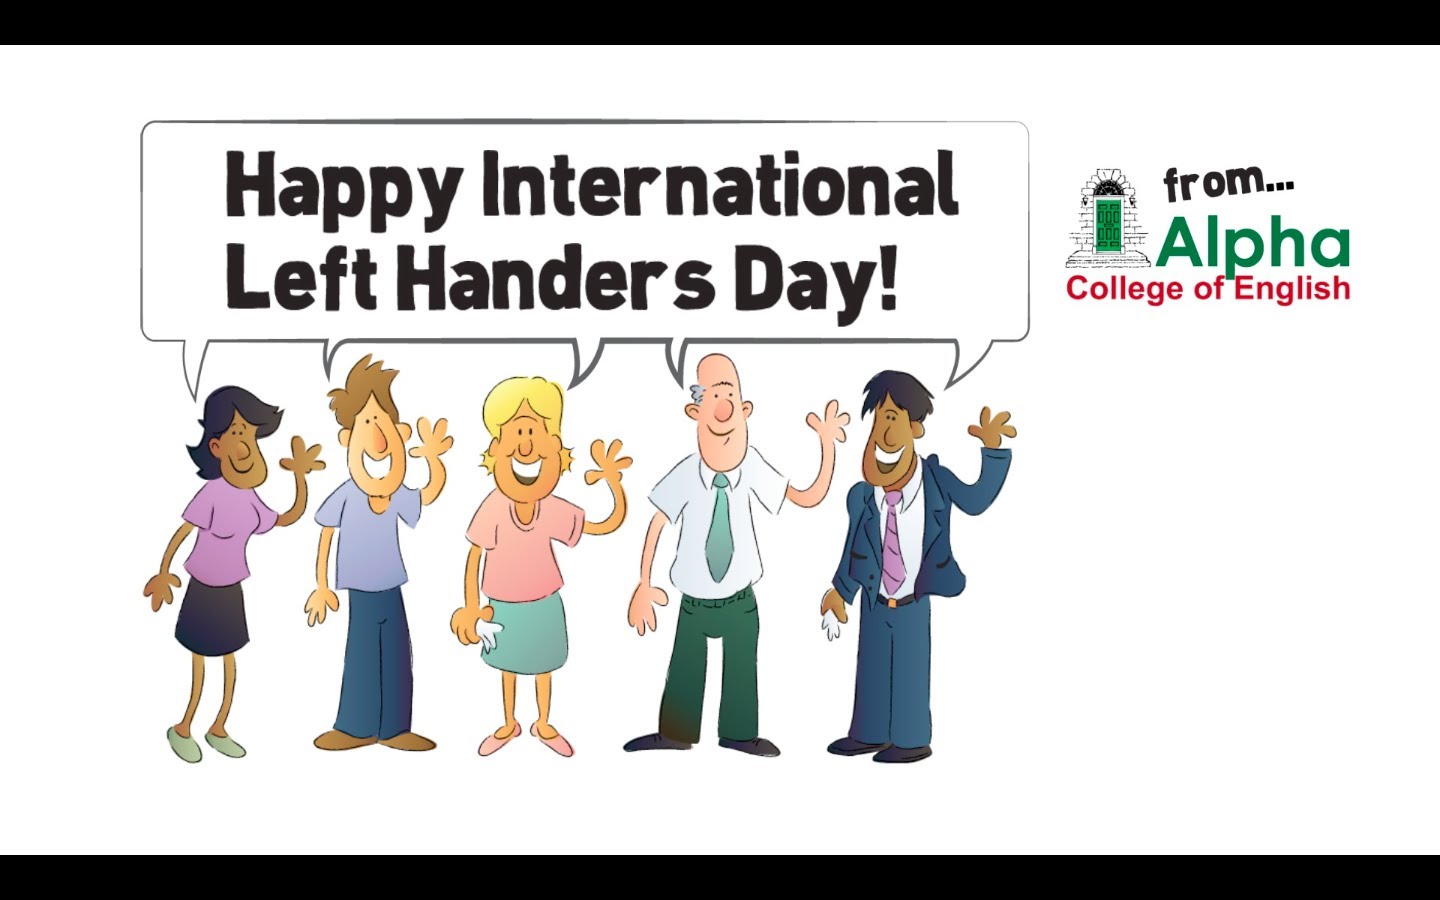 Left handers. Праздник lefthanders' Day. Int left